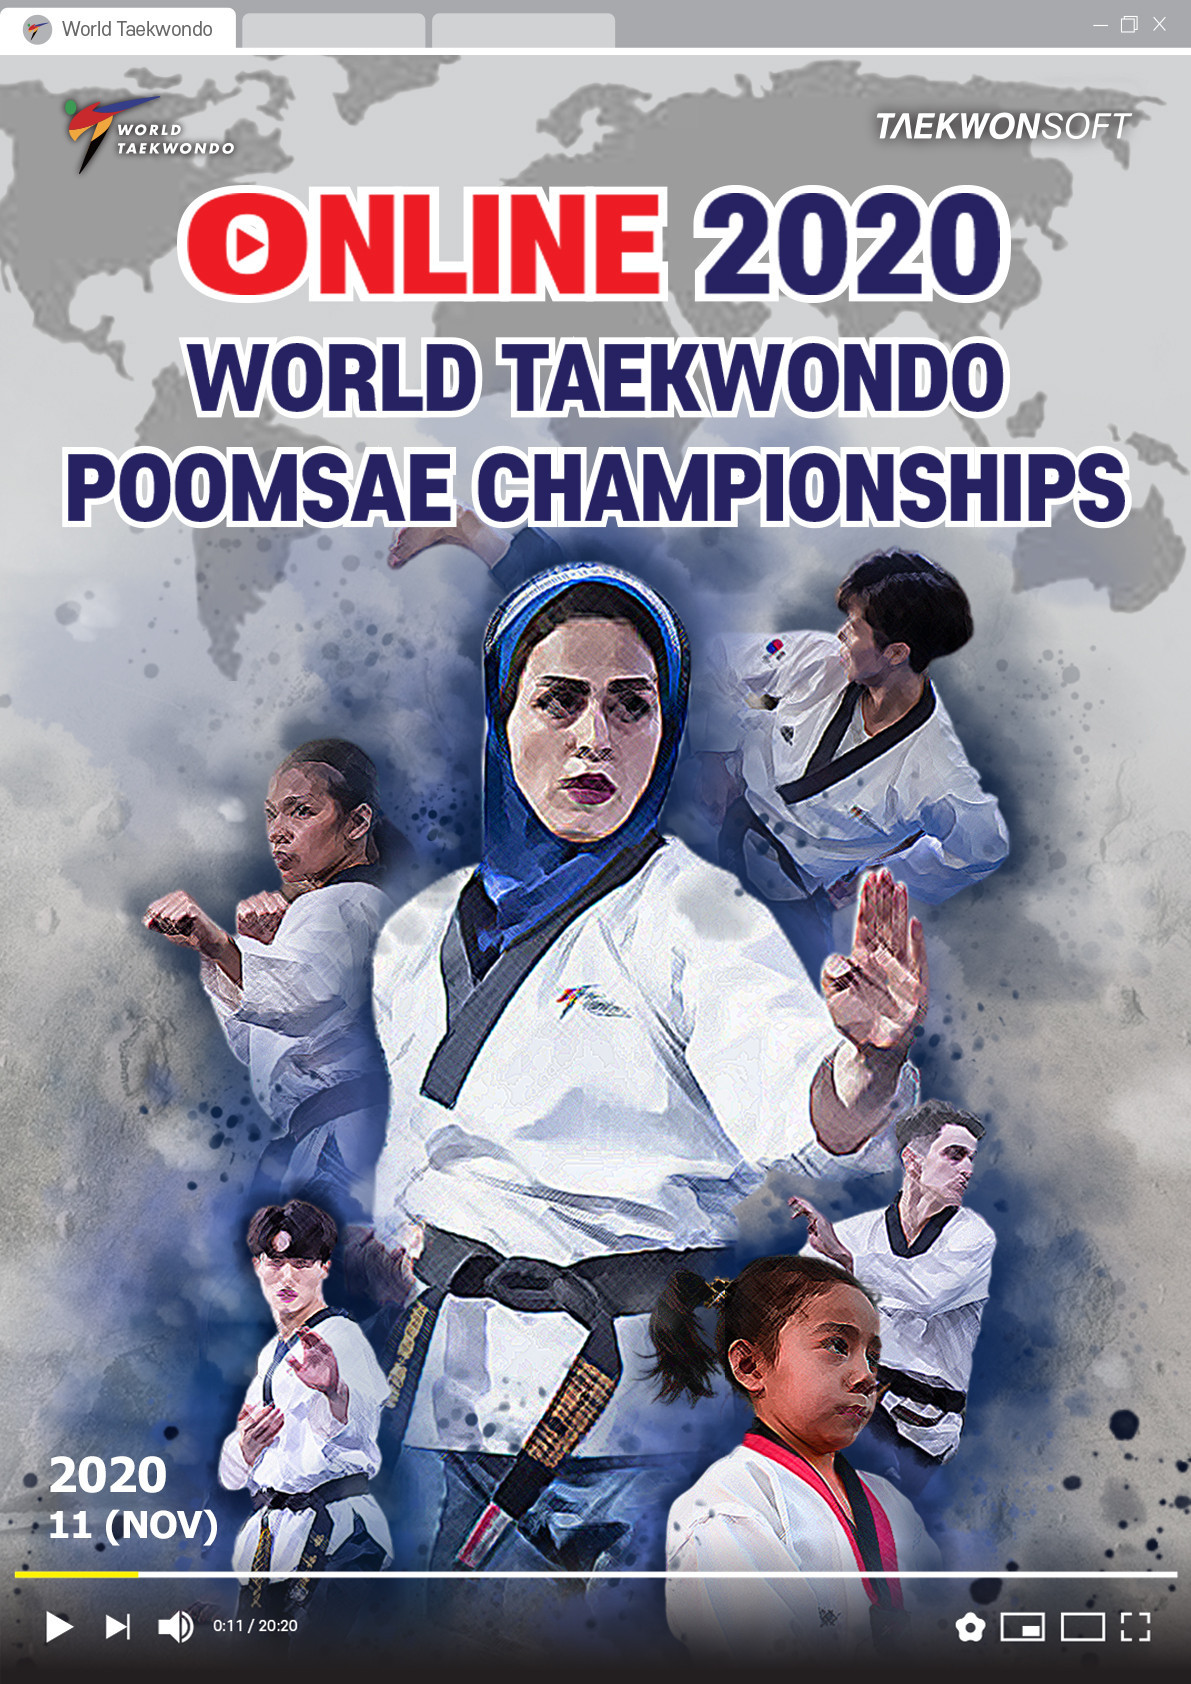 World Taekwondo has announced that its inaugural Online World Taekwondo Poomsae Championships will be "open to all" from November 15 ©World Taekwondo